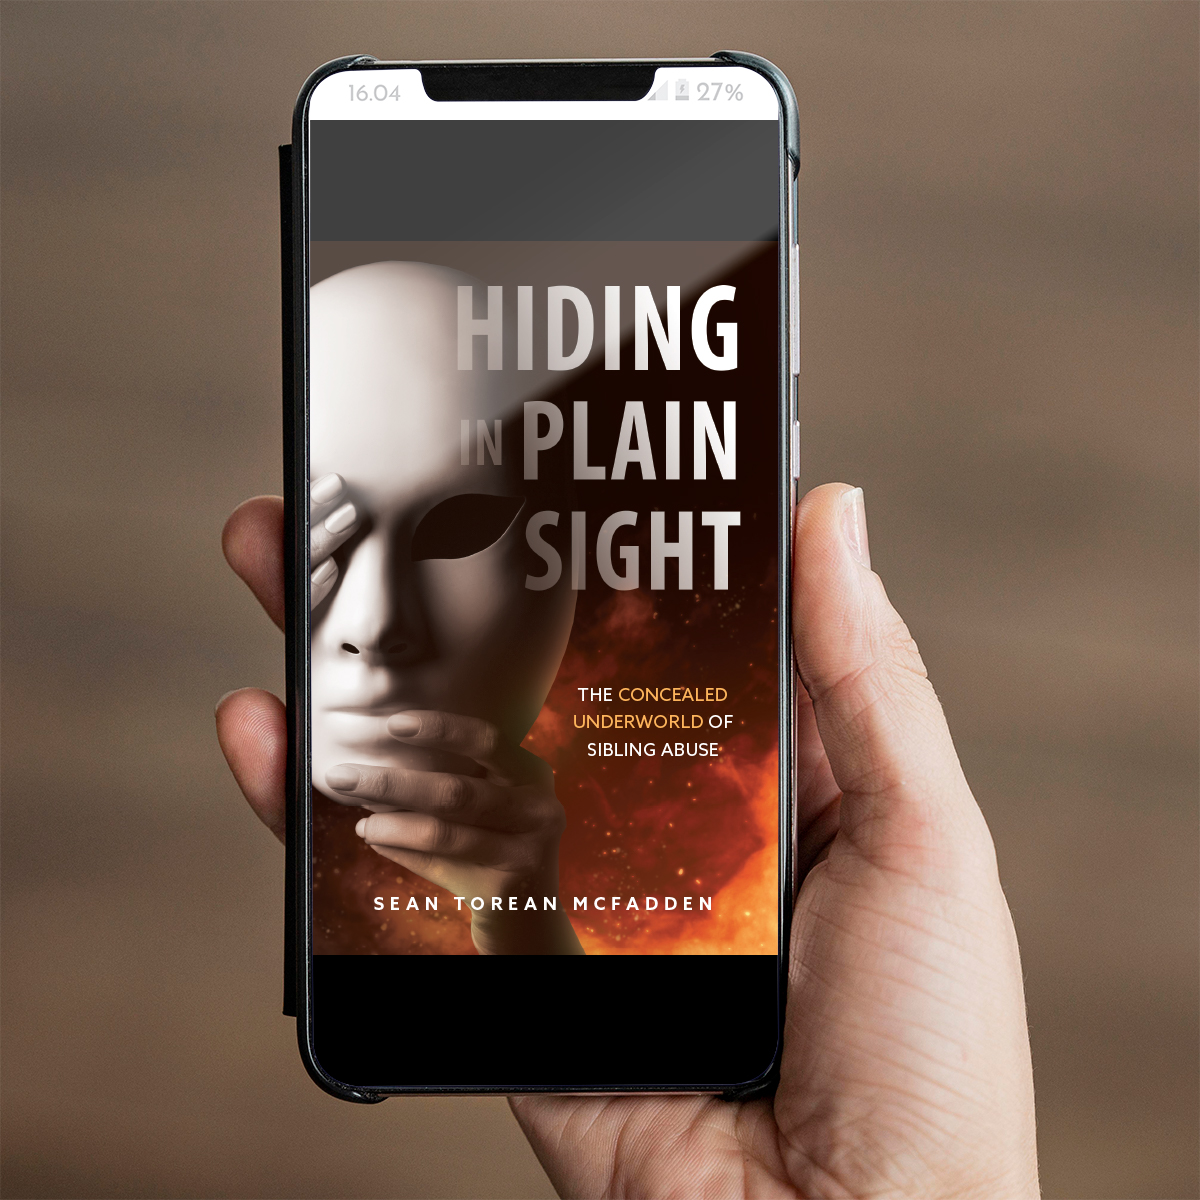 Hiding in Plain Sight ebook in phone mockup